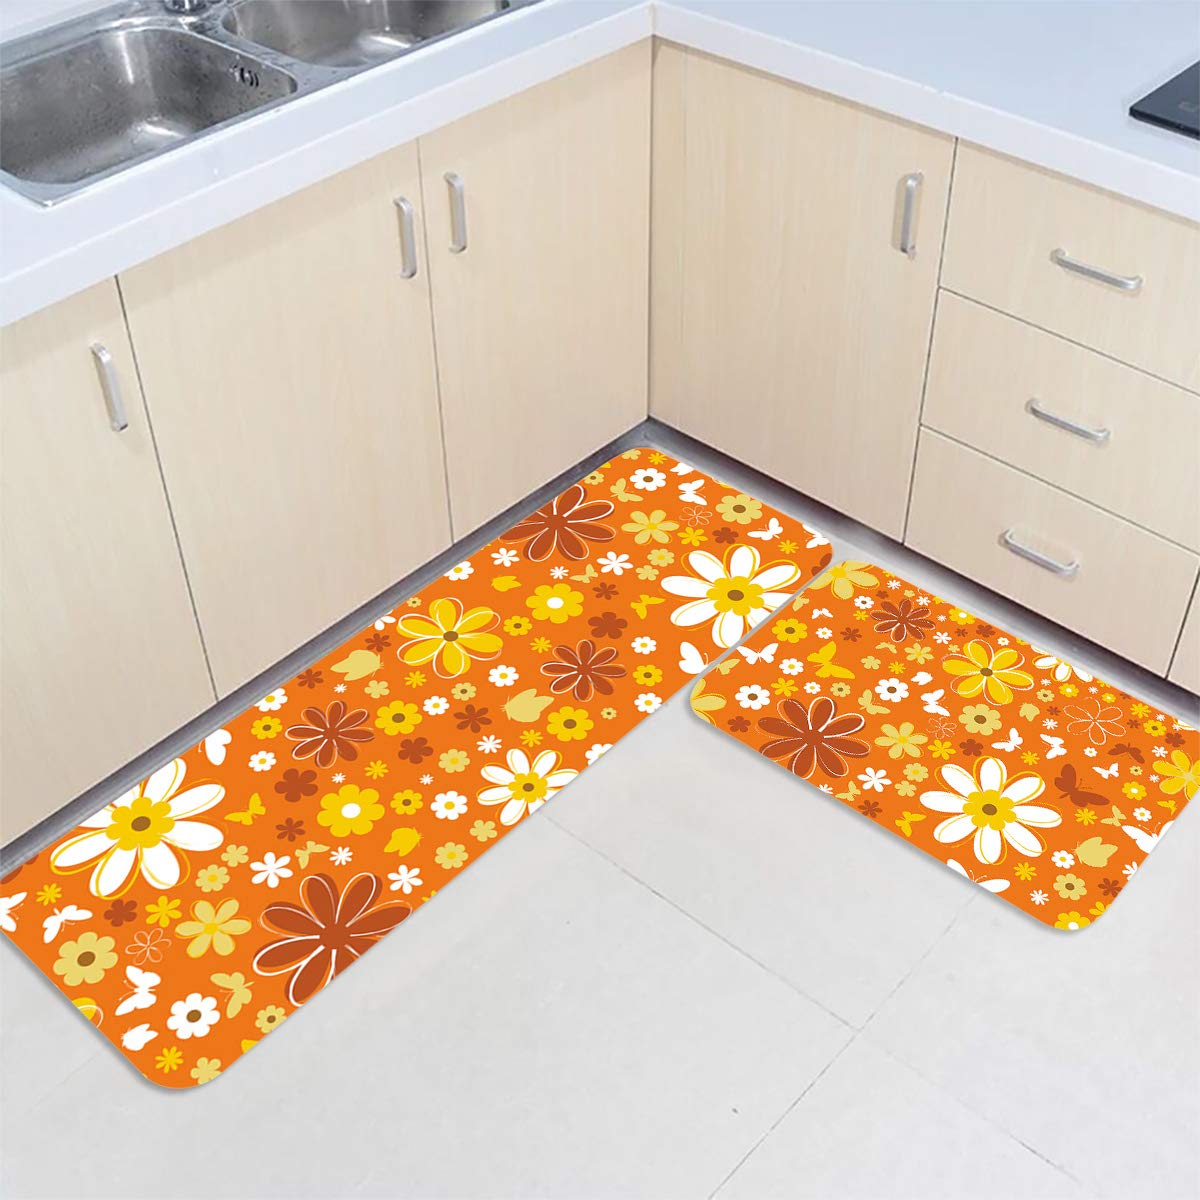 Floral Kitchen Mats for Floor 2 Piece Cushioned Comfort Standing Mat Kitchen Runner Rug Set for Home & Office Orange Butterfly Flower